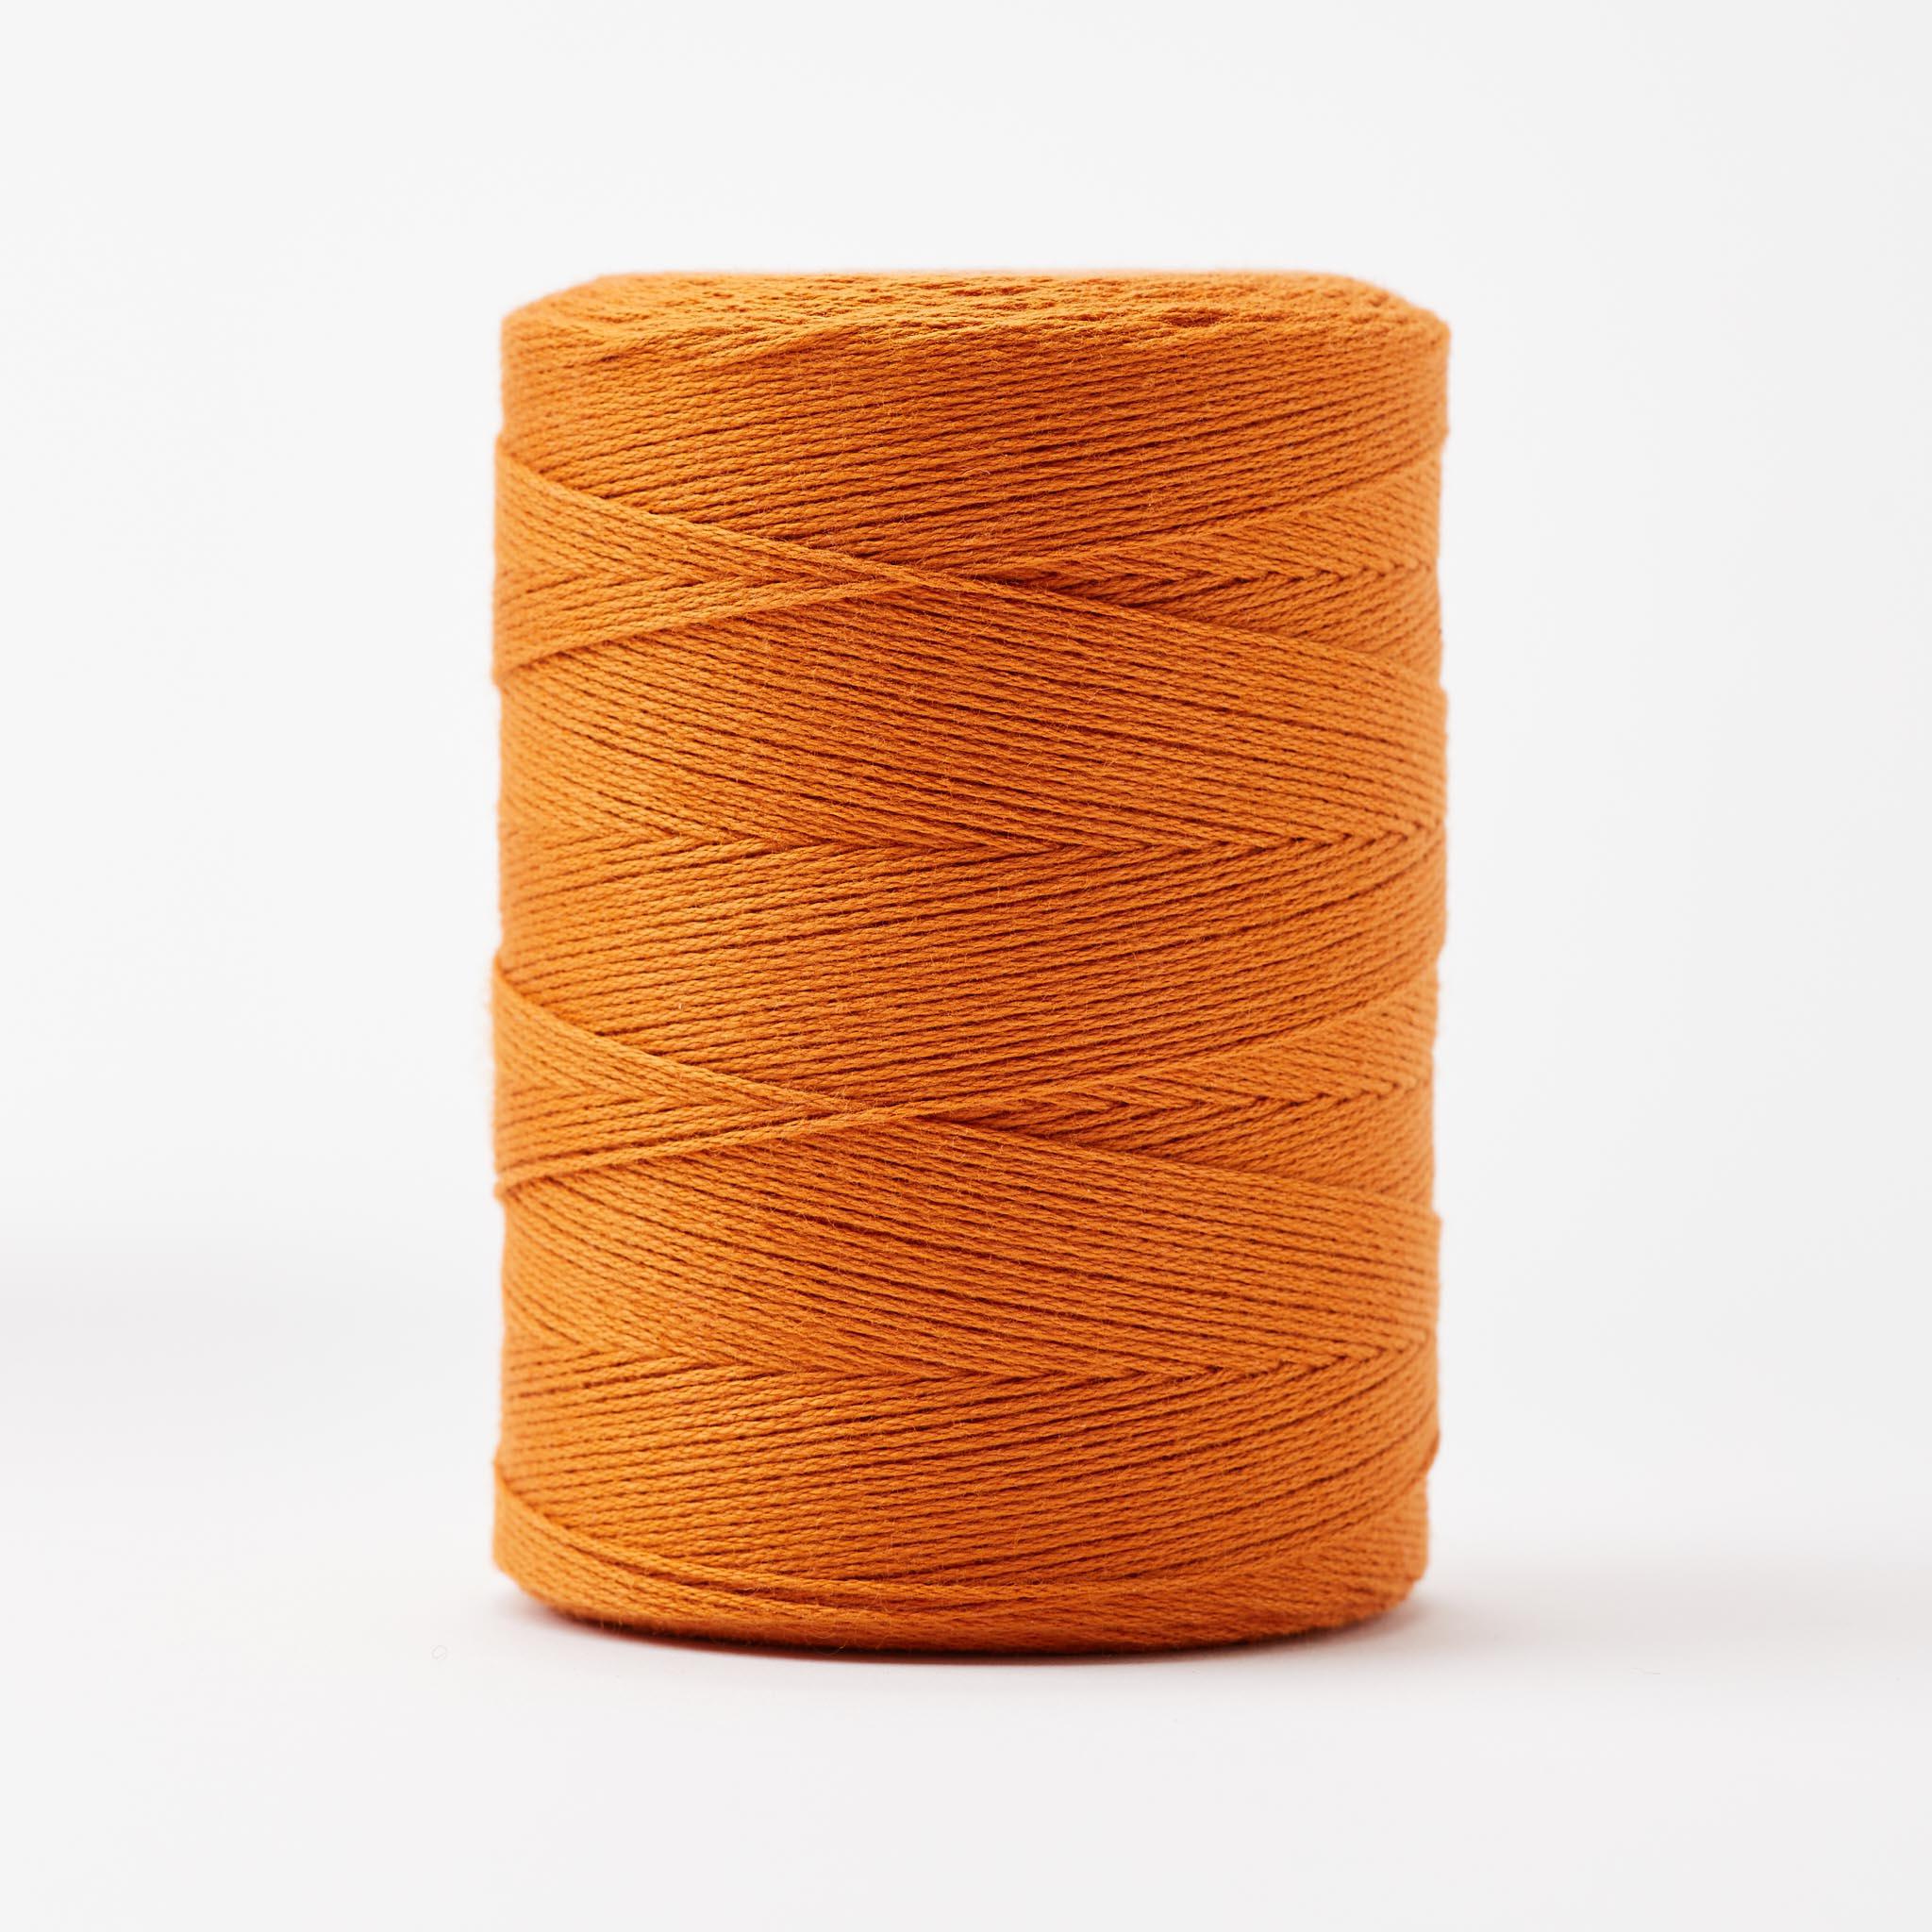 8/4 Un-Mercerized Cotton Weaving Yarn ~ Orange - Gist Yarn